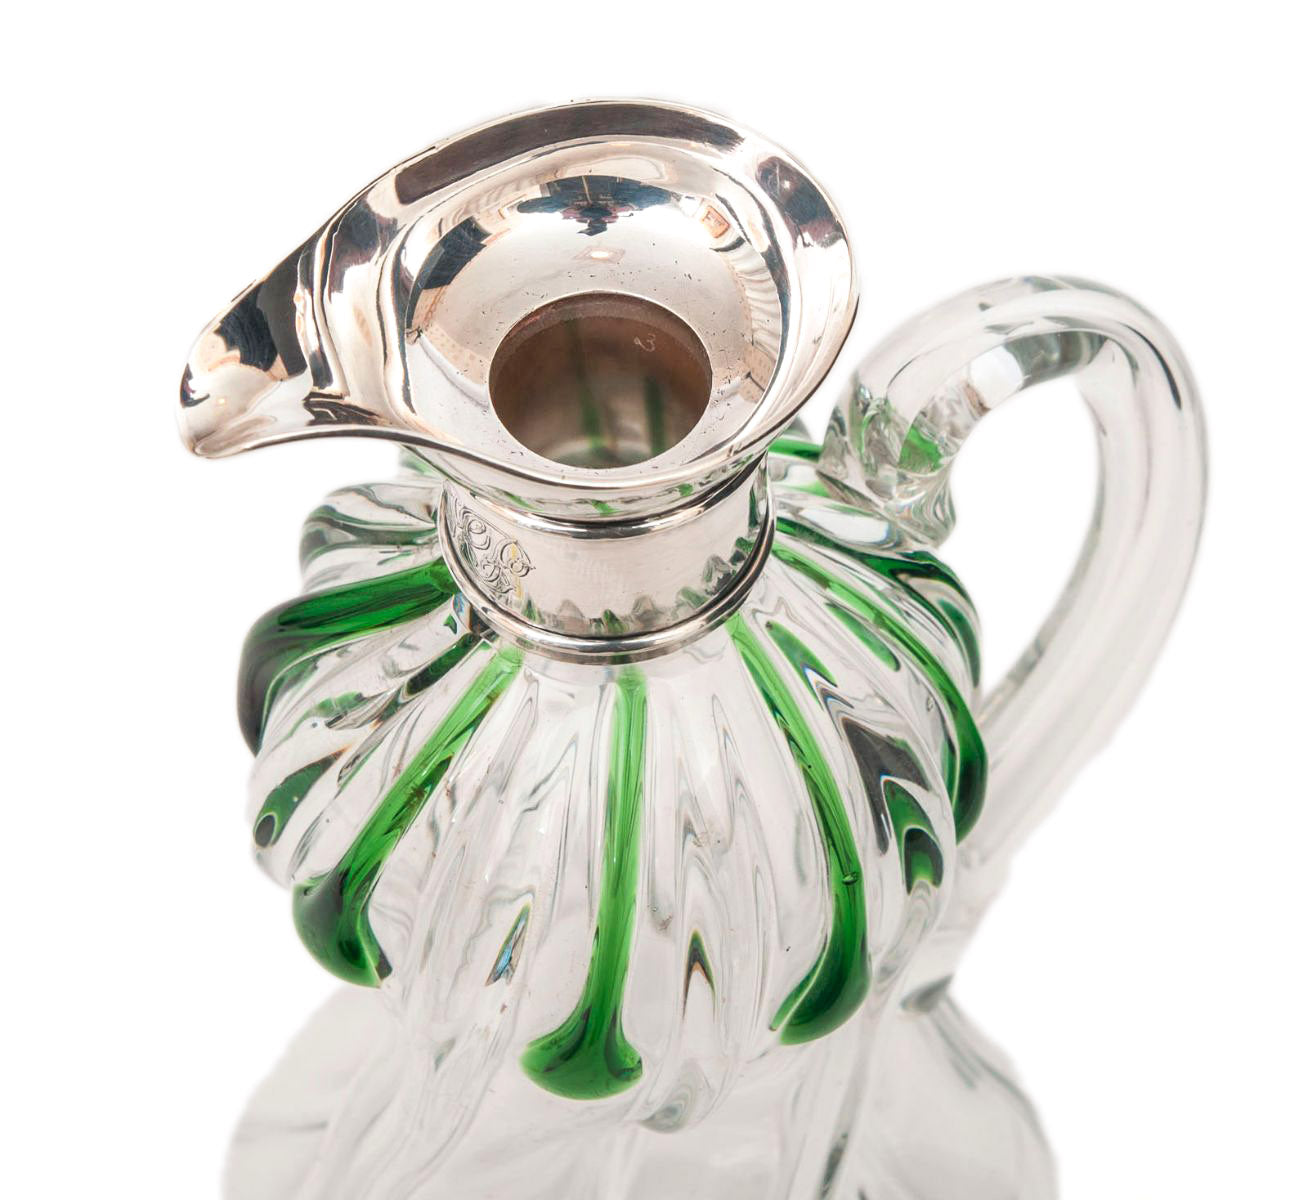 Antique Stuart Crystal Art Nouveau Silver & Green Glass Cairngorm Drop Decanter (Code 8265)